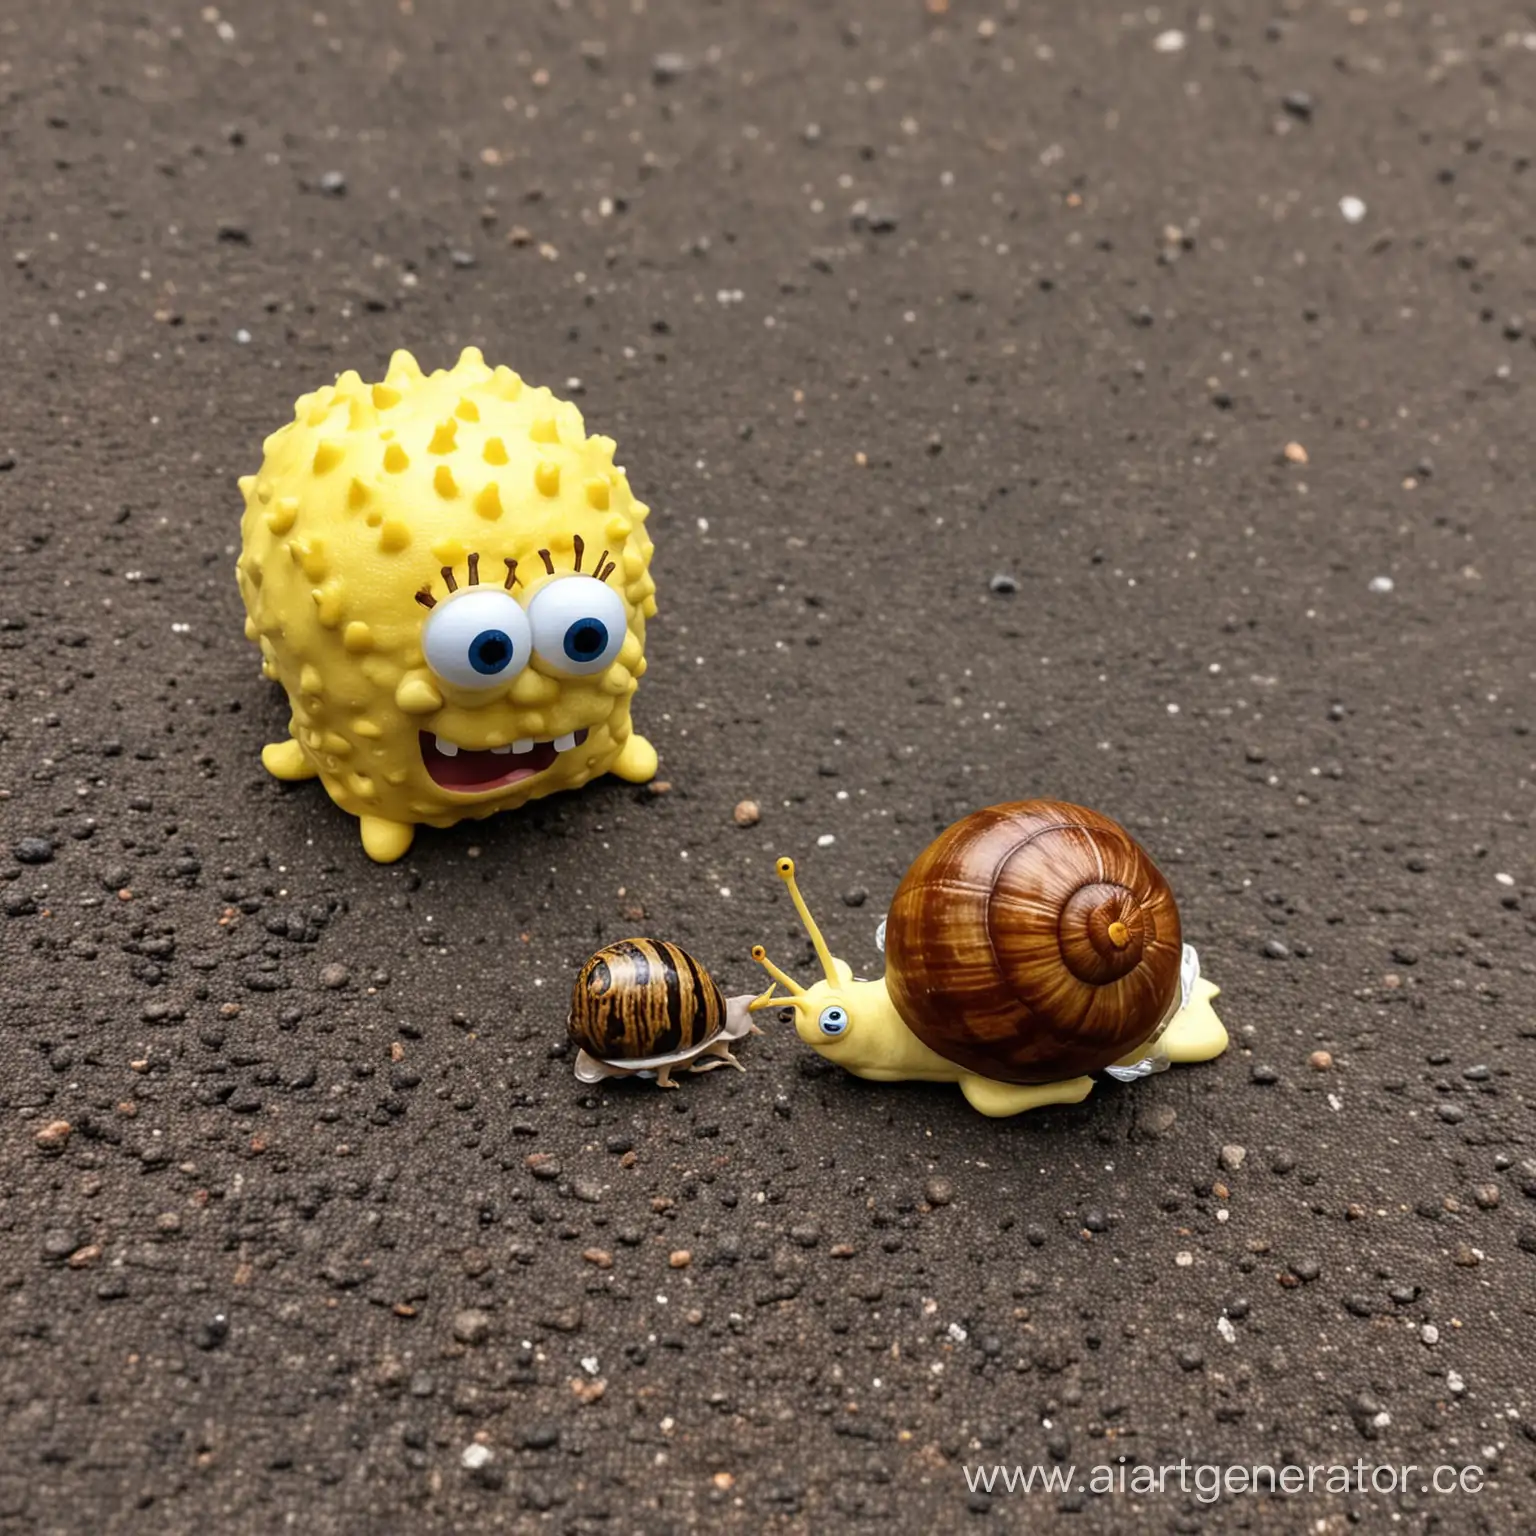 spongebob with his pet snail gary

